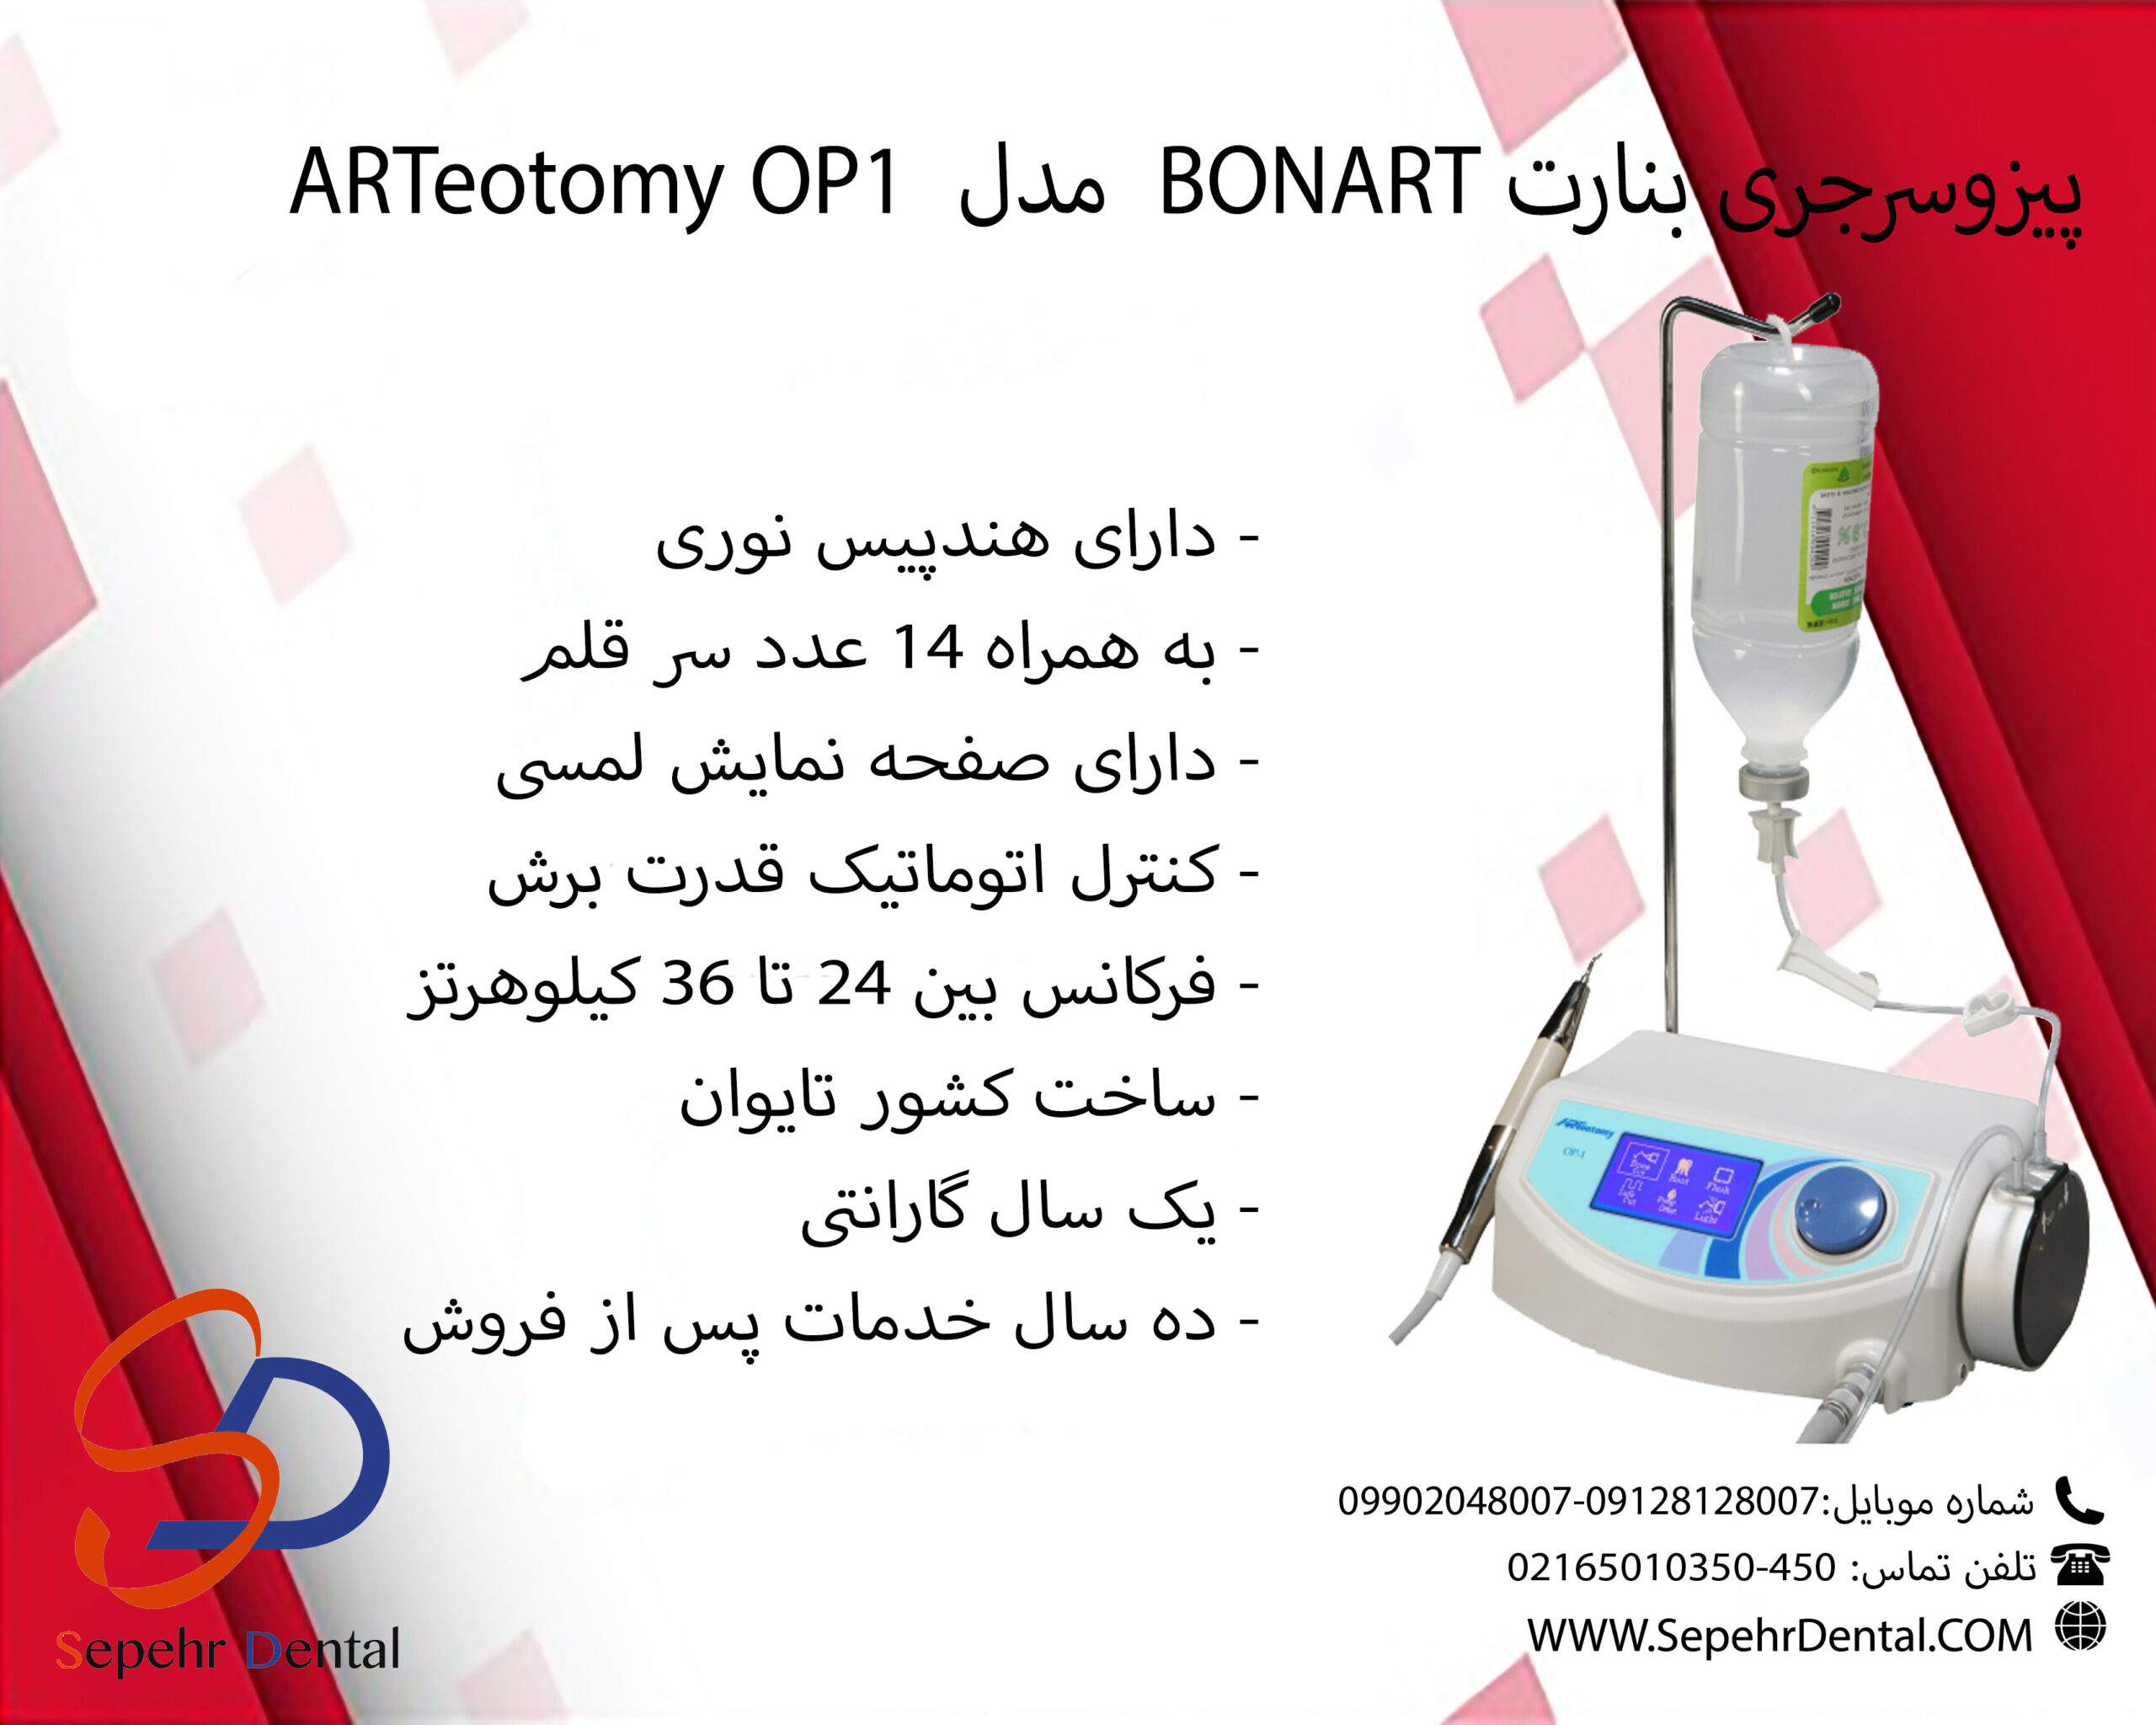 BONART ARTeotomy OP1